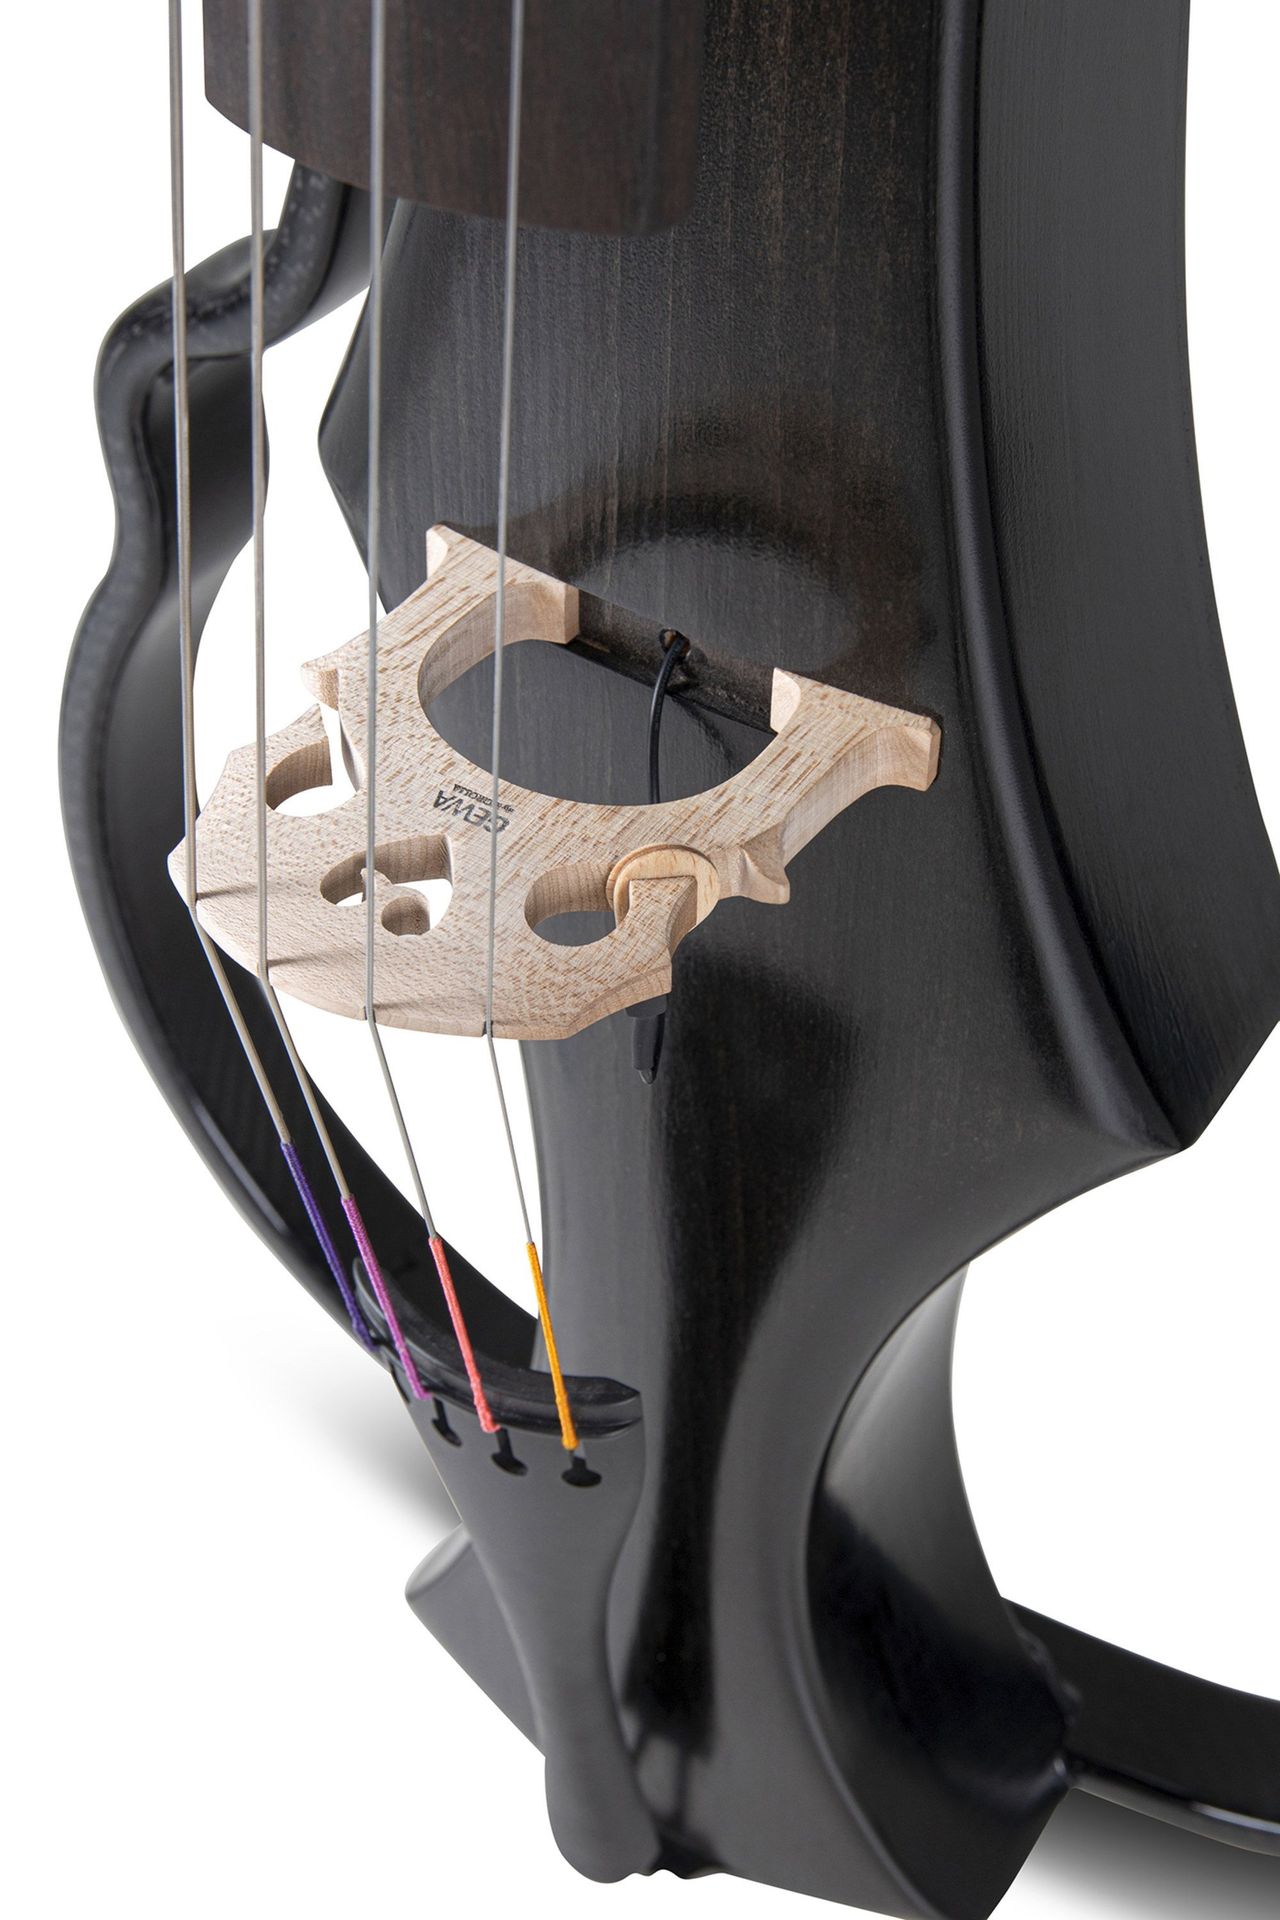 GEWA E-Cello NOVITA 3.0 Farbe schwarz